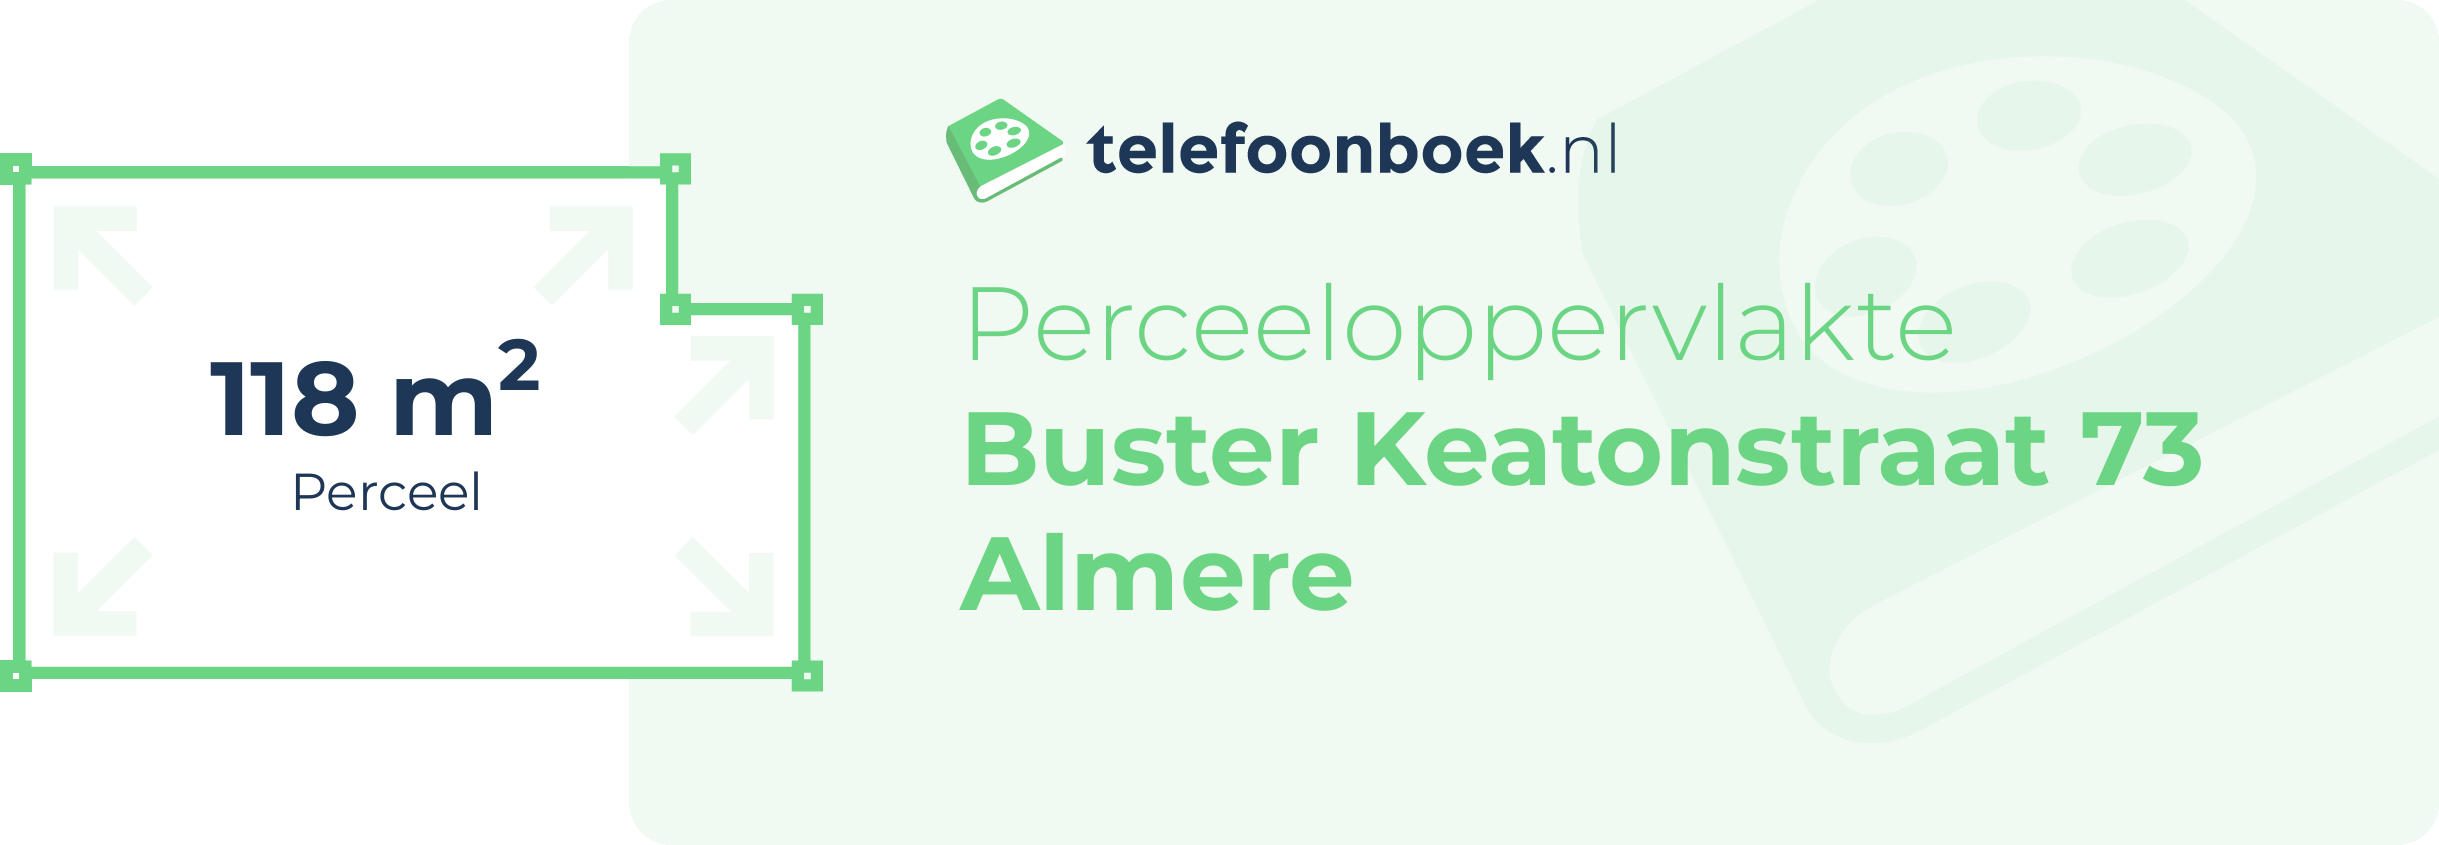 Perceeloppervlakte Buster Keatonstraat 73 Almere